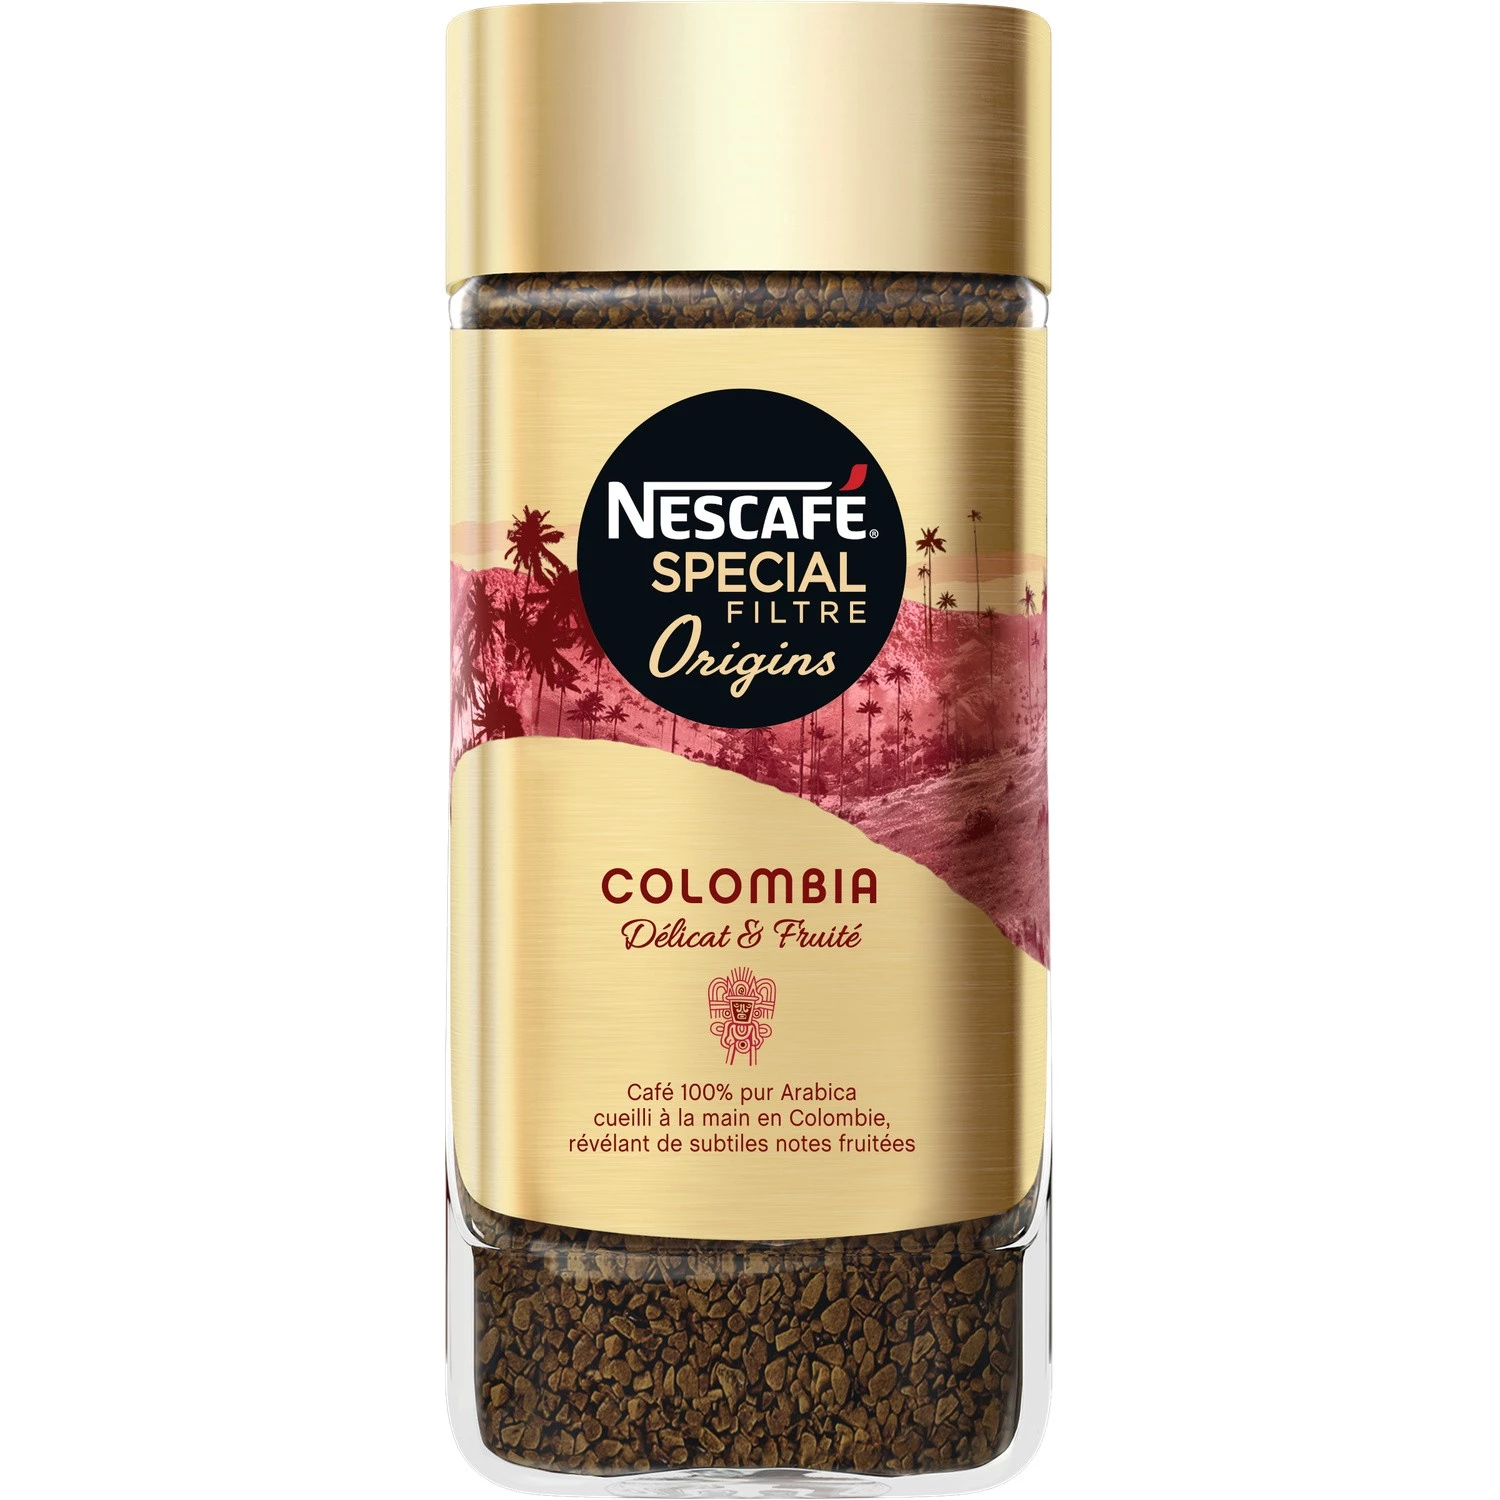 Colombia origins special filter soluble coffee 95g - NESCAFÉ